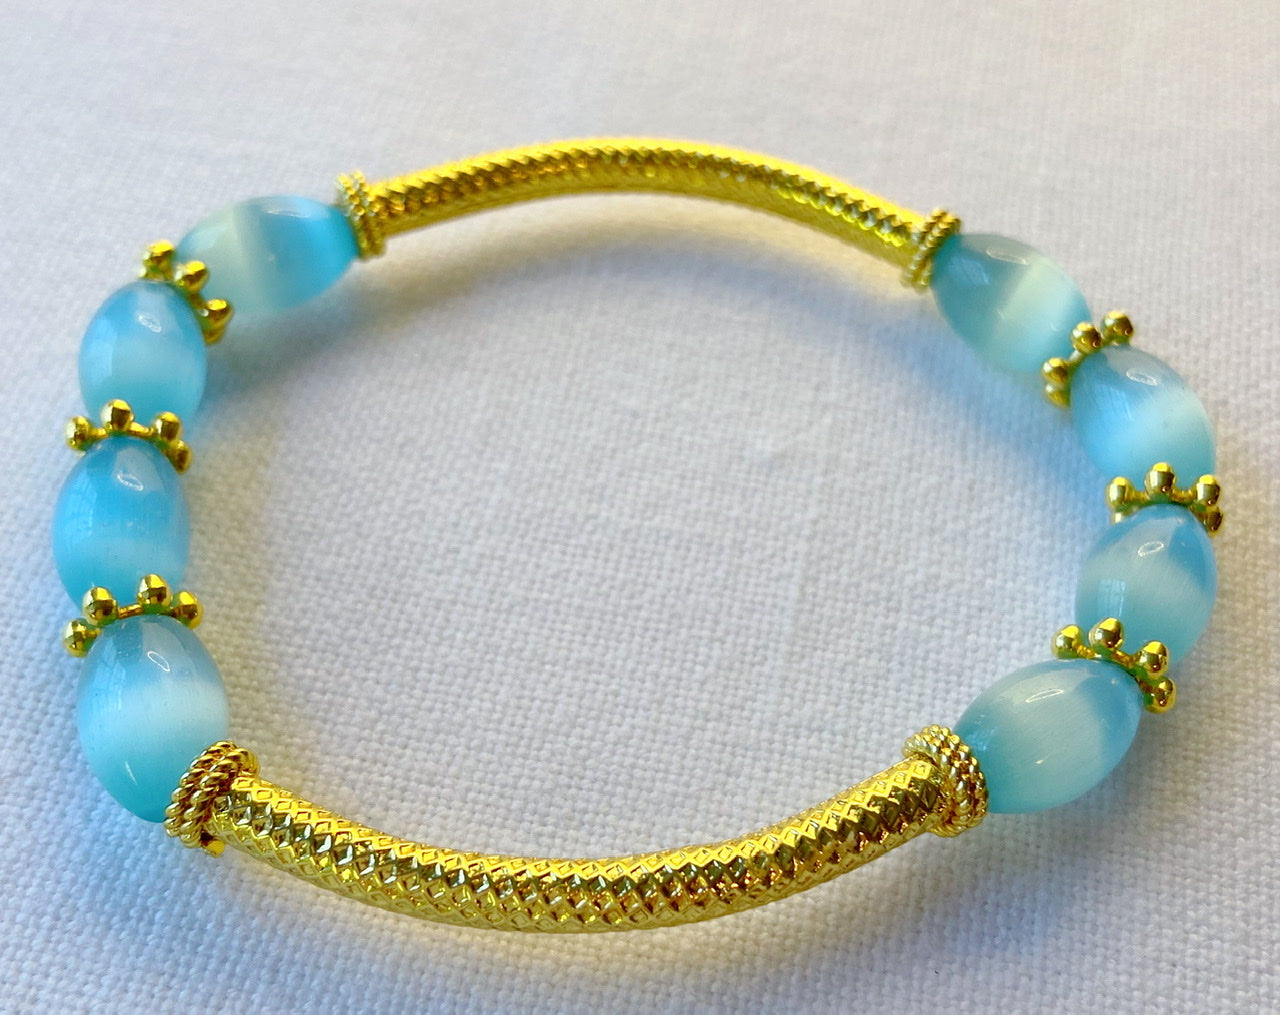 Vibrant Blue Mexican Fire Opal Gemstones and 18k Gold Vermeil Bracelet